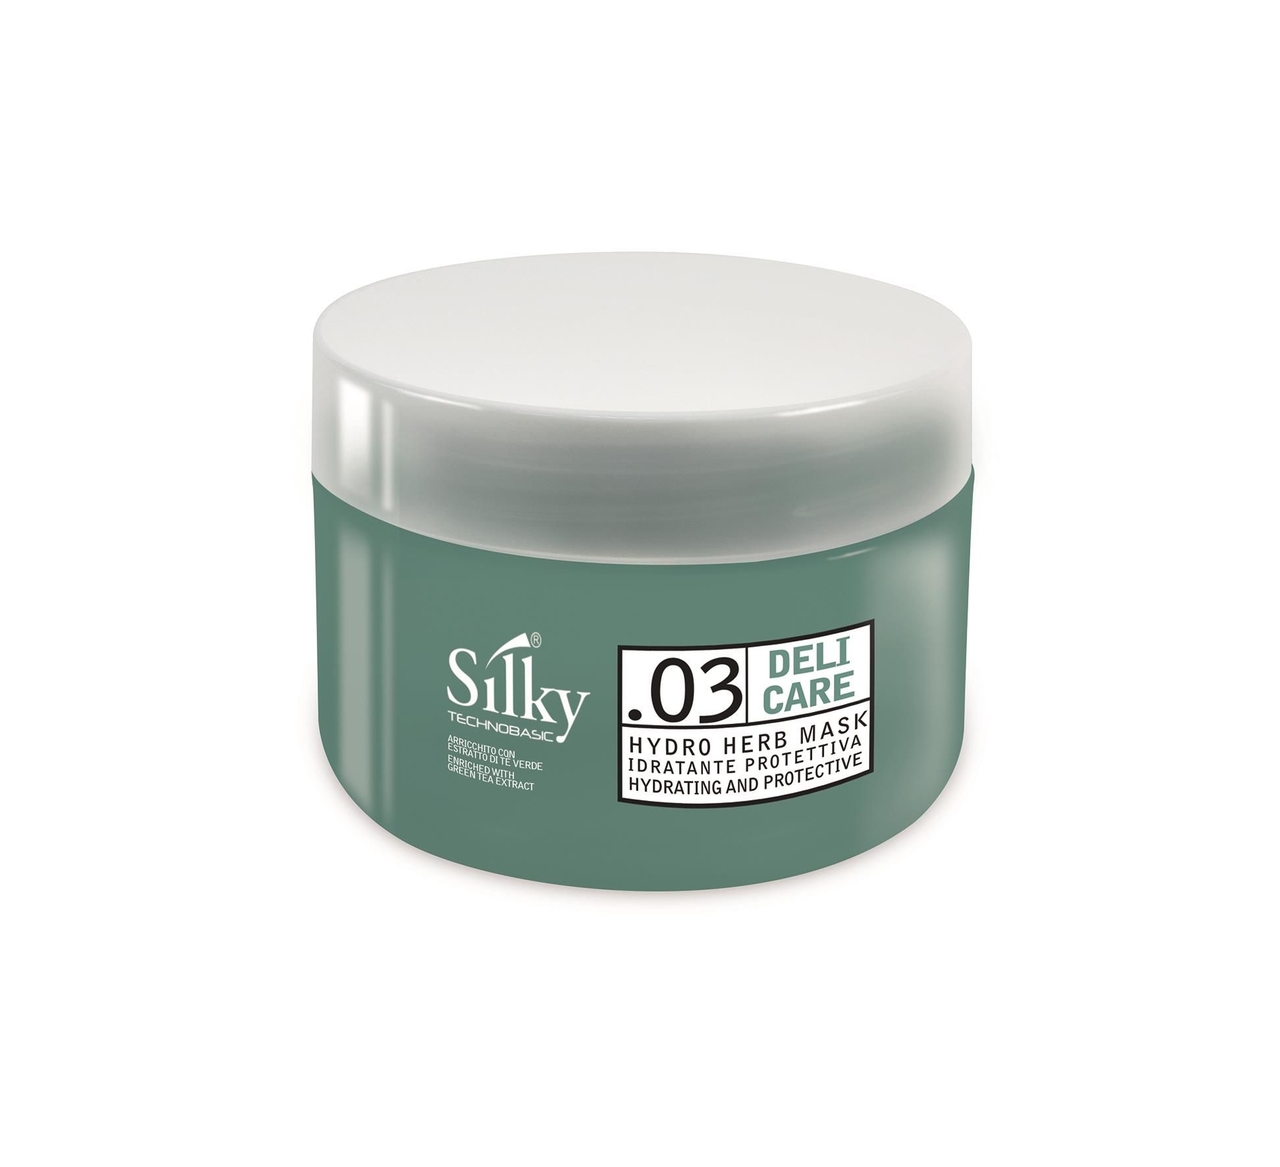 baden aanklager laten we het doen Silky .03 Deli Care Hydro Herb Mask 250ml | HD-Haircare.nl